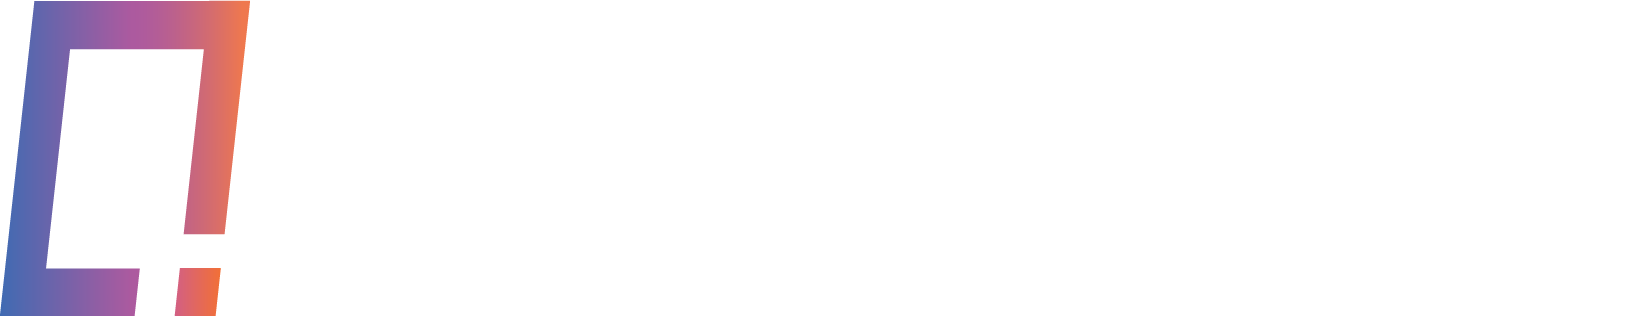 blankpage_logo-negro-SYMBOL